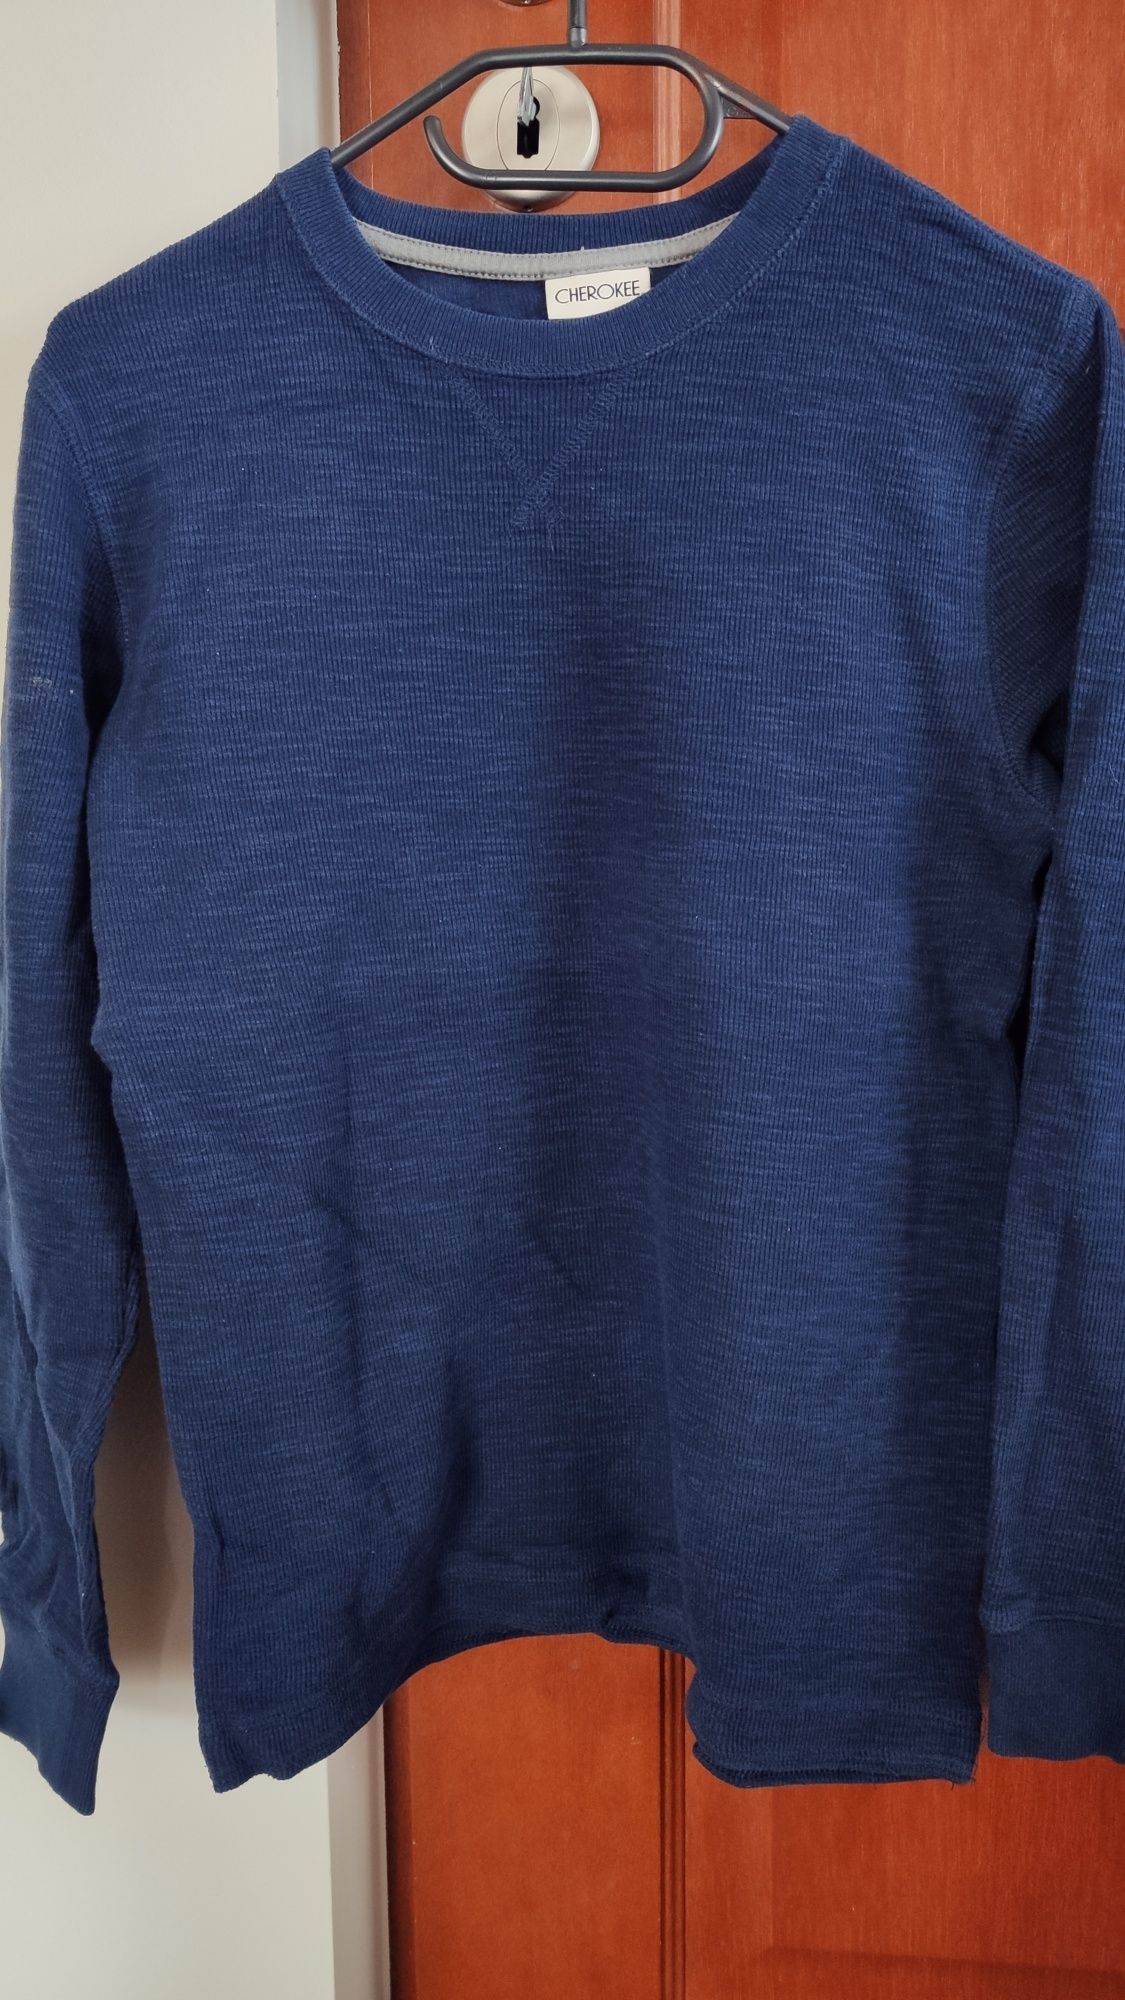 Bluzy Ralph Lauren Abercrombie i inne longsleeve chłopięce 158/164